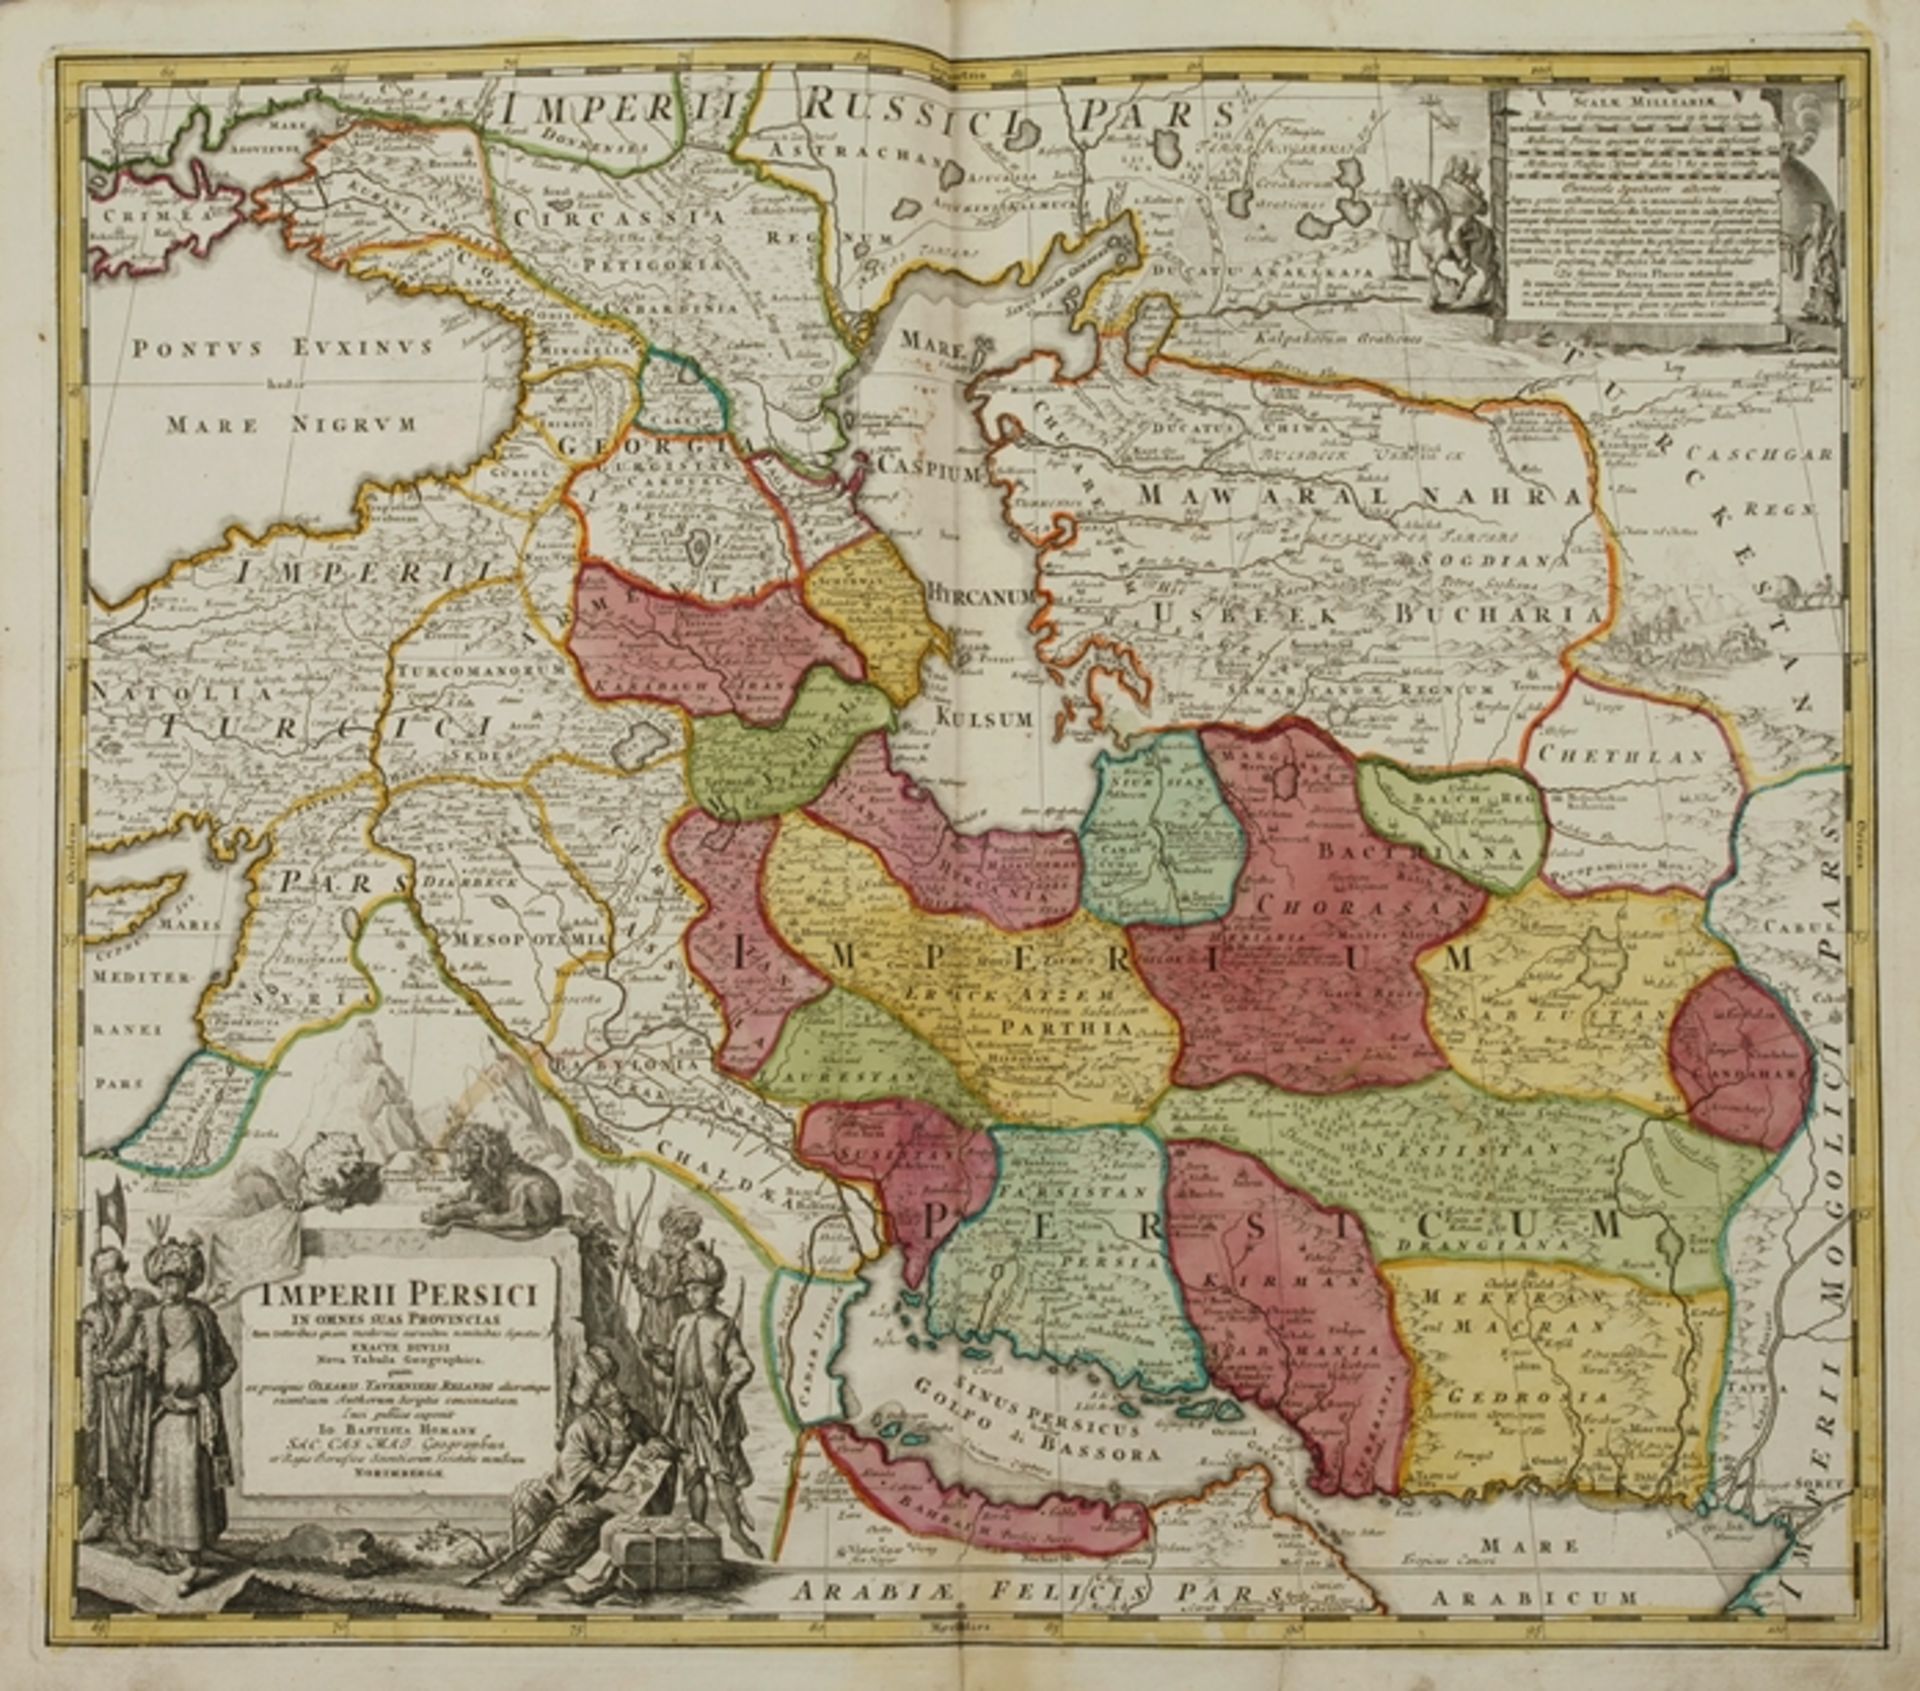 Johann Baptist Homann, Kupferstichkarte Persien